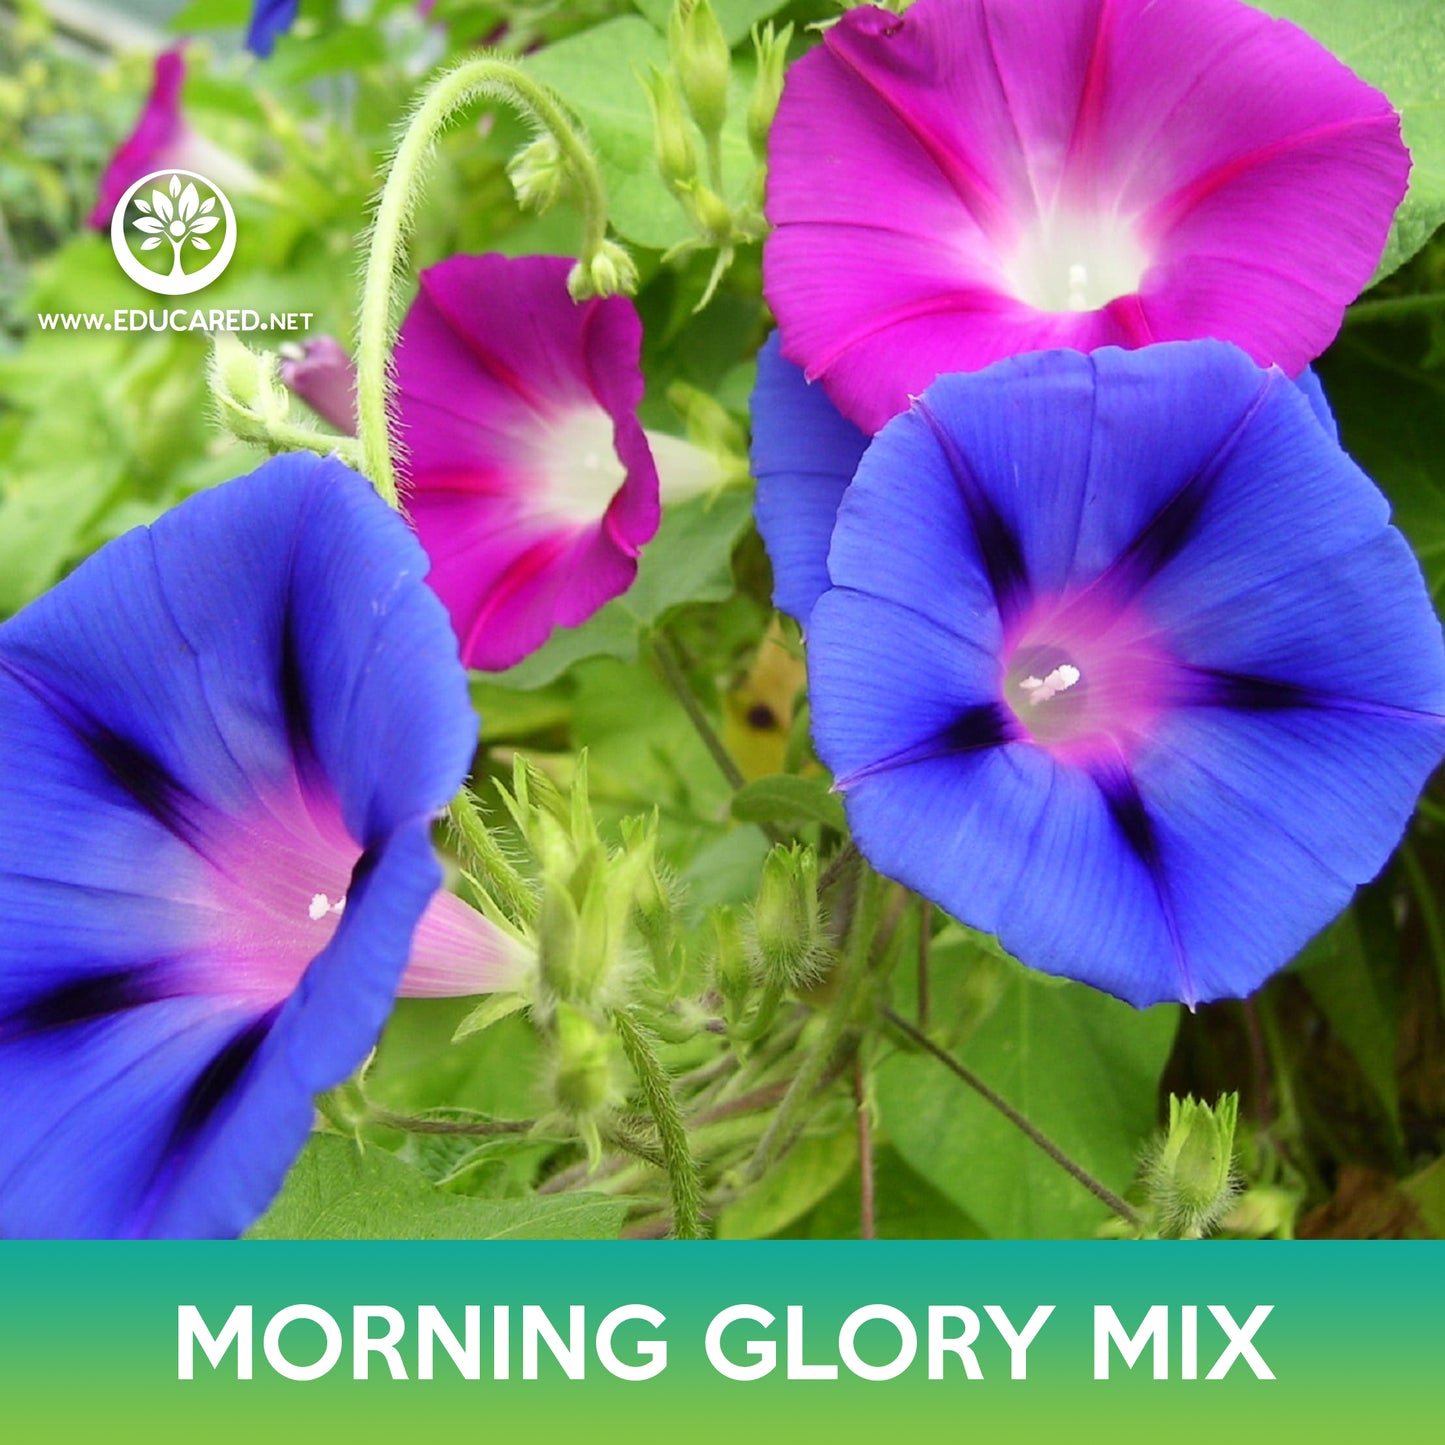 Morning Glory Mix Seed